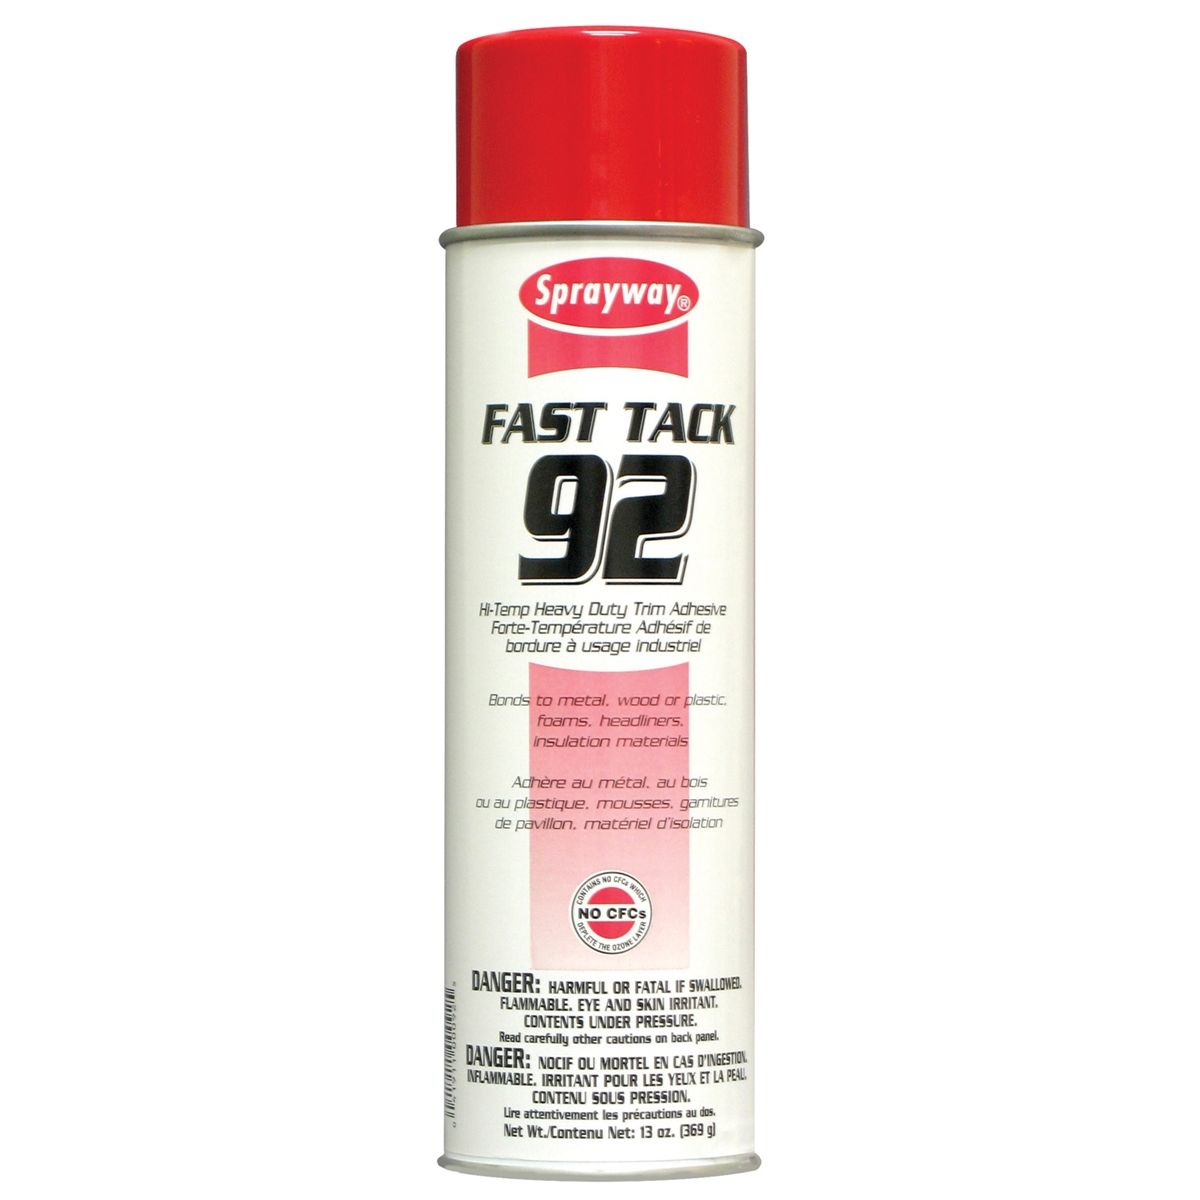 Fast Tack Hi-Temp Heavy Duty Trim Adhesive